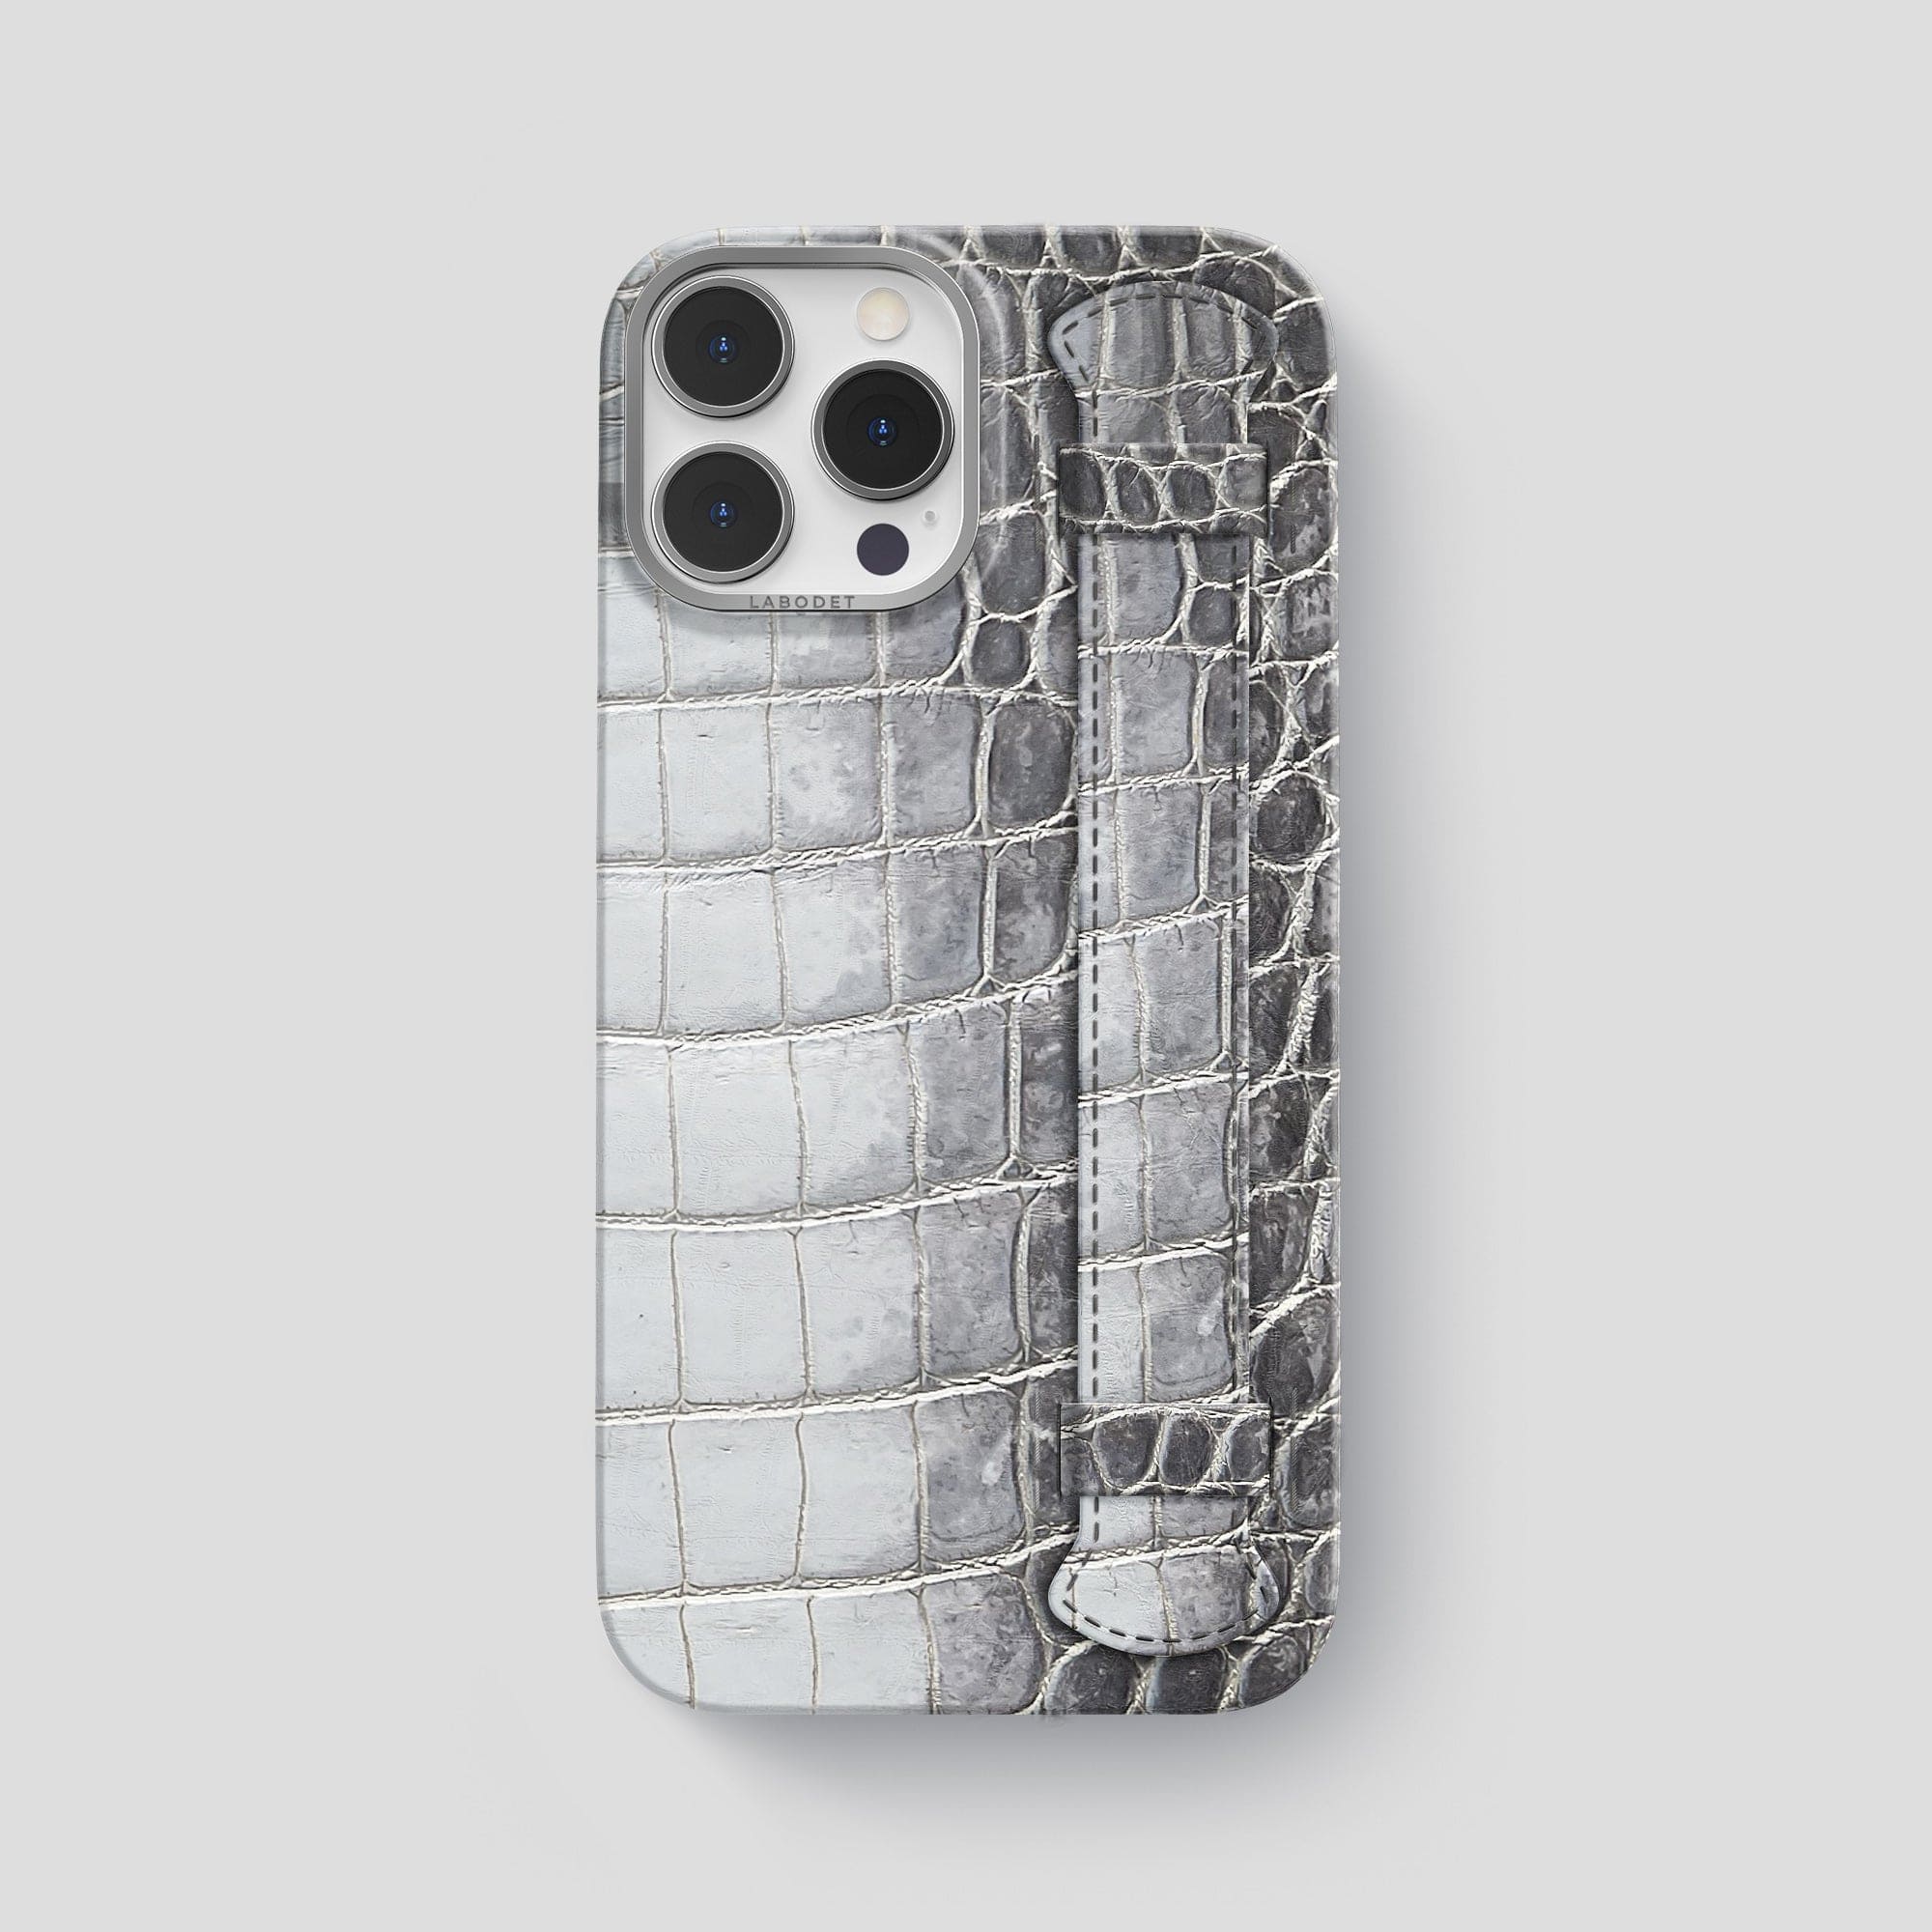 Hadoro Luxury Alligator Leather Black Grey iPhone 13 Pro Max Case